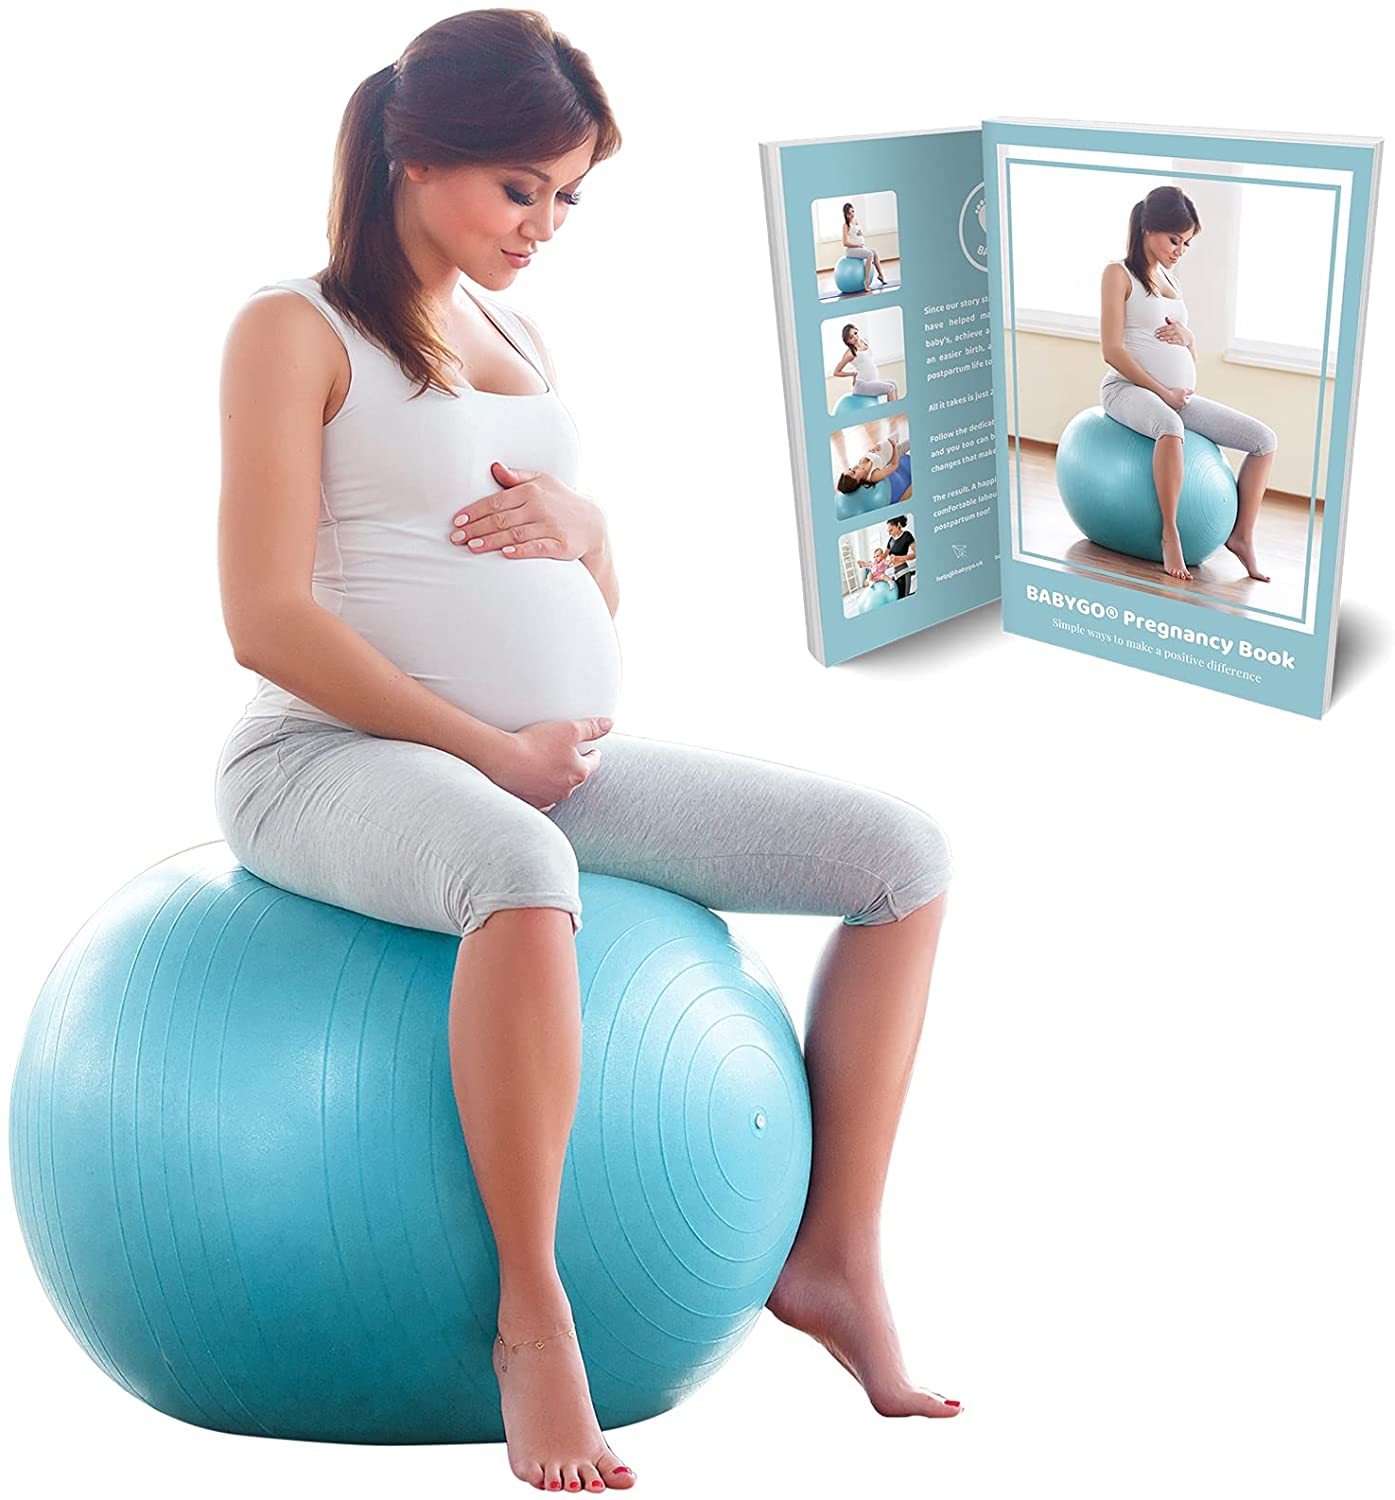 Birthing Ball Pregnancy Maternity Labor , Yoga Ball,Pregnancy Book includes Pump